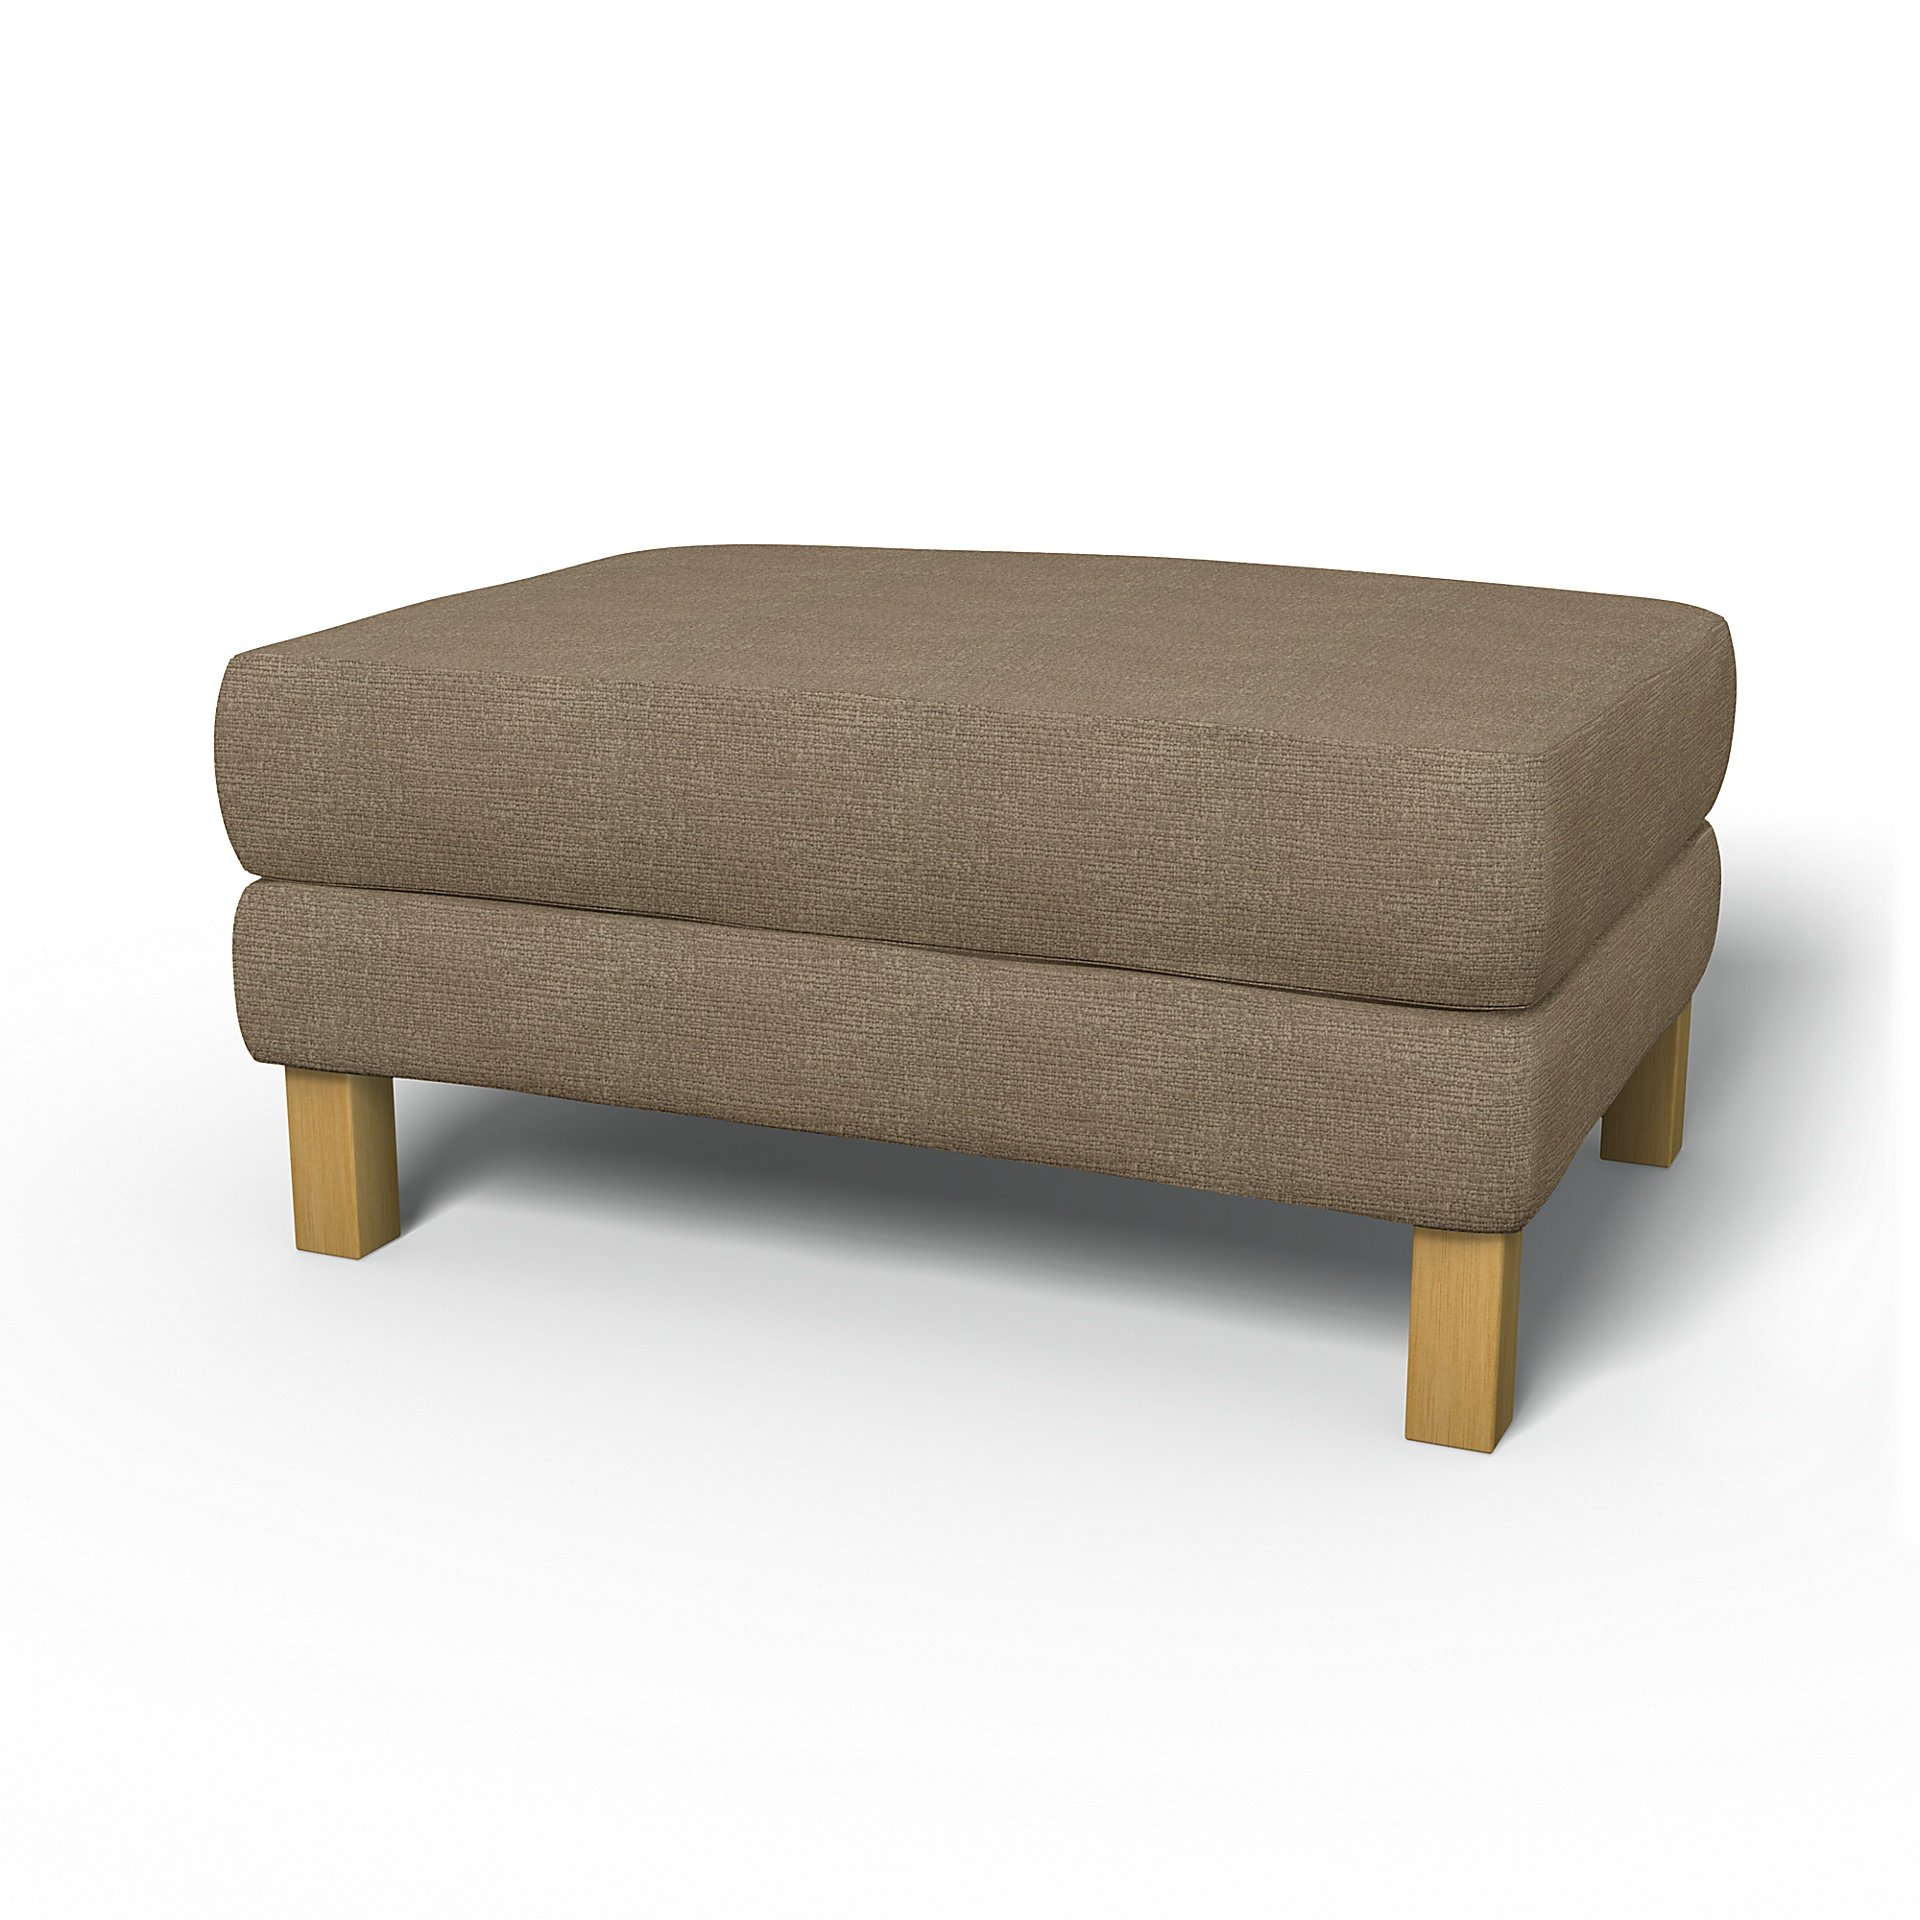 IKEA - Karlstad Footstool Cover, Camel, Boucle & Texture - Bemz